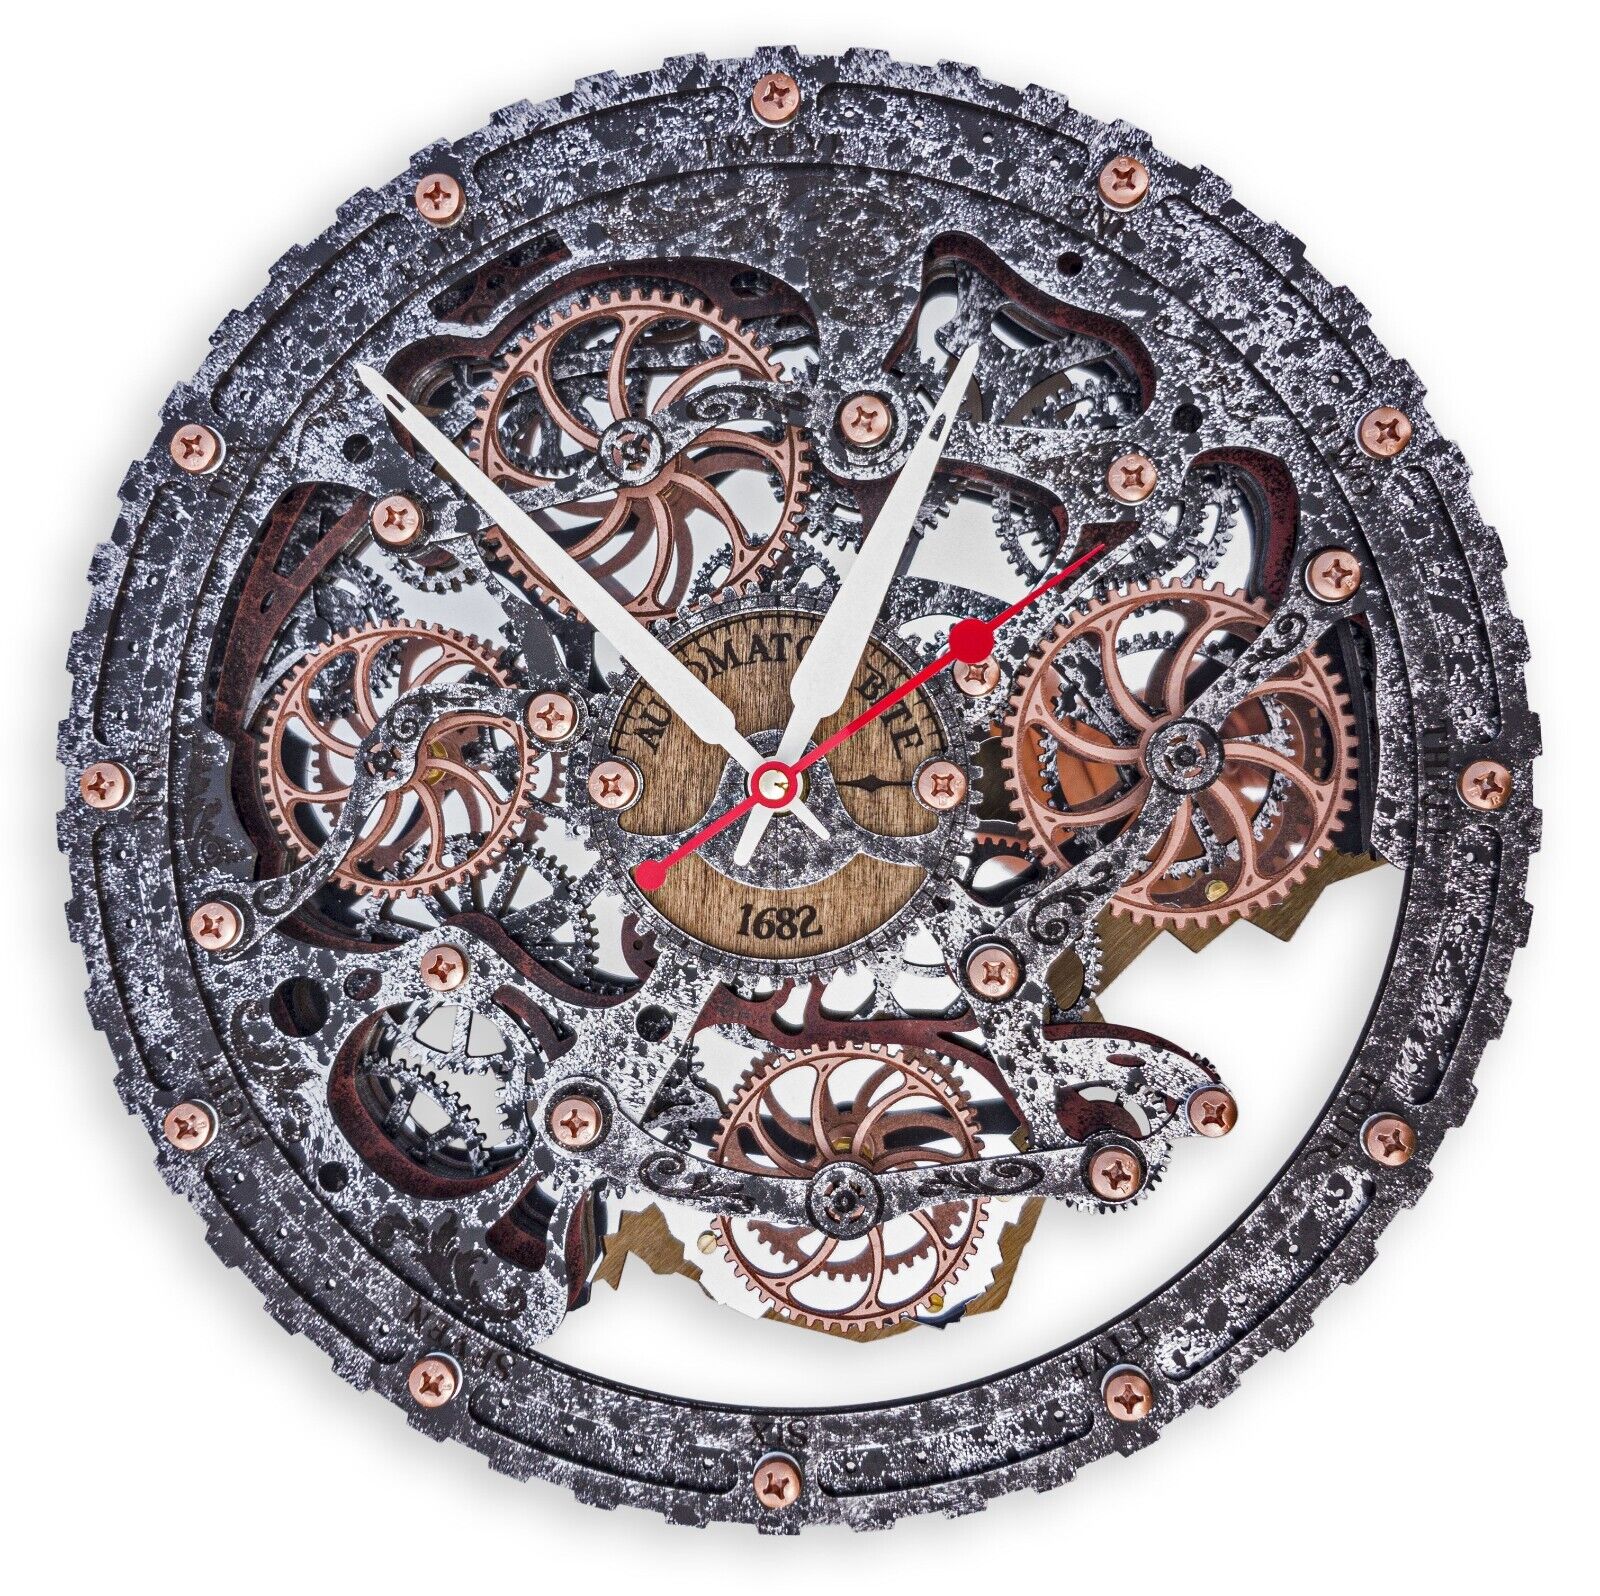 Automaton Bite Moving Gears Wall Clock 1682 Circle Metal Jack Steampunk Loft Art